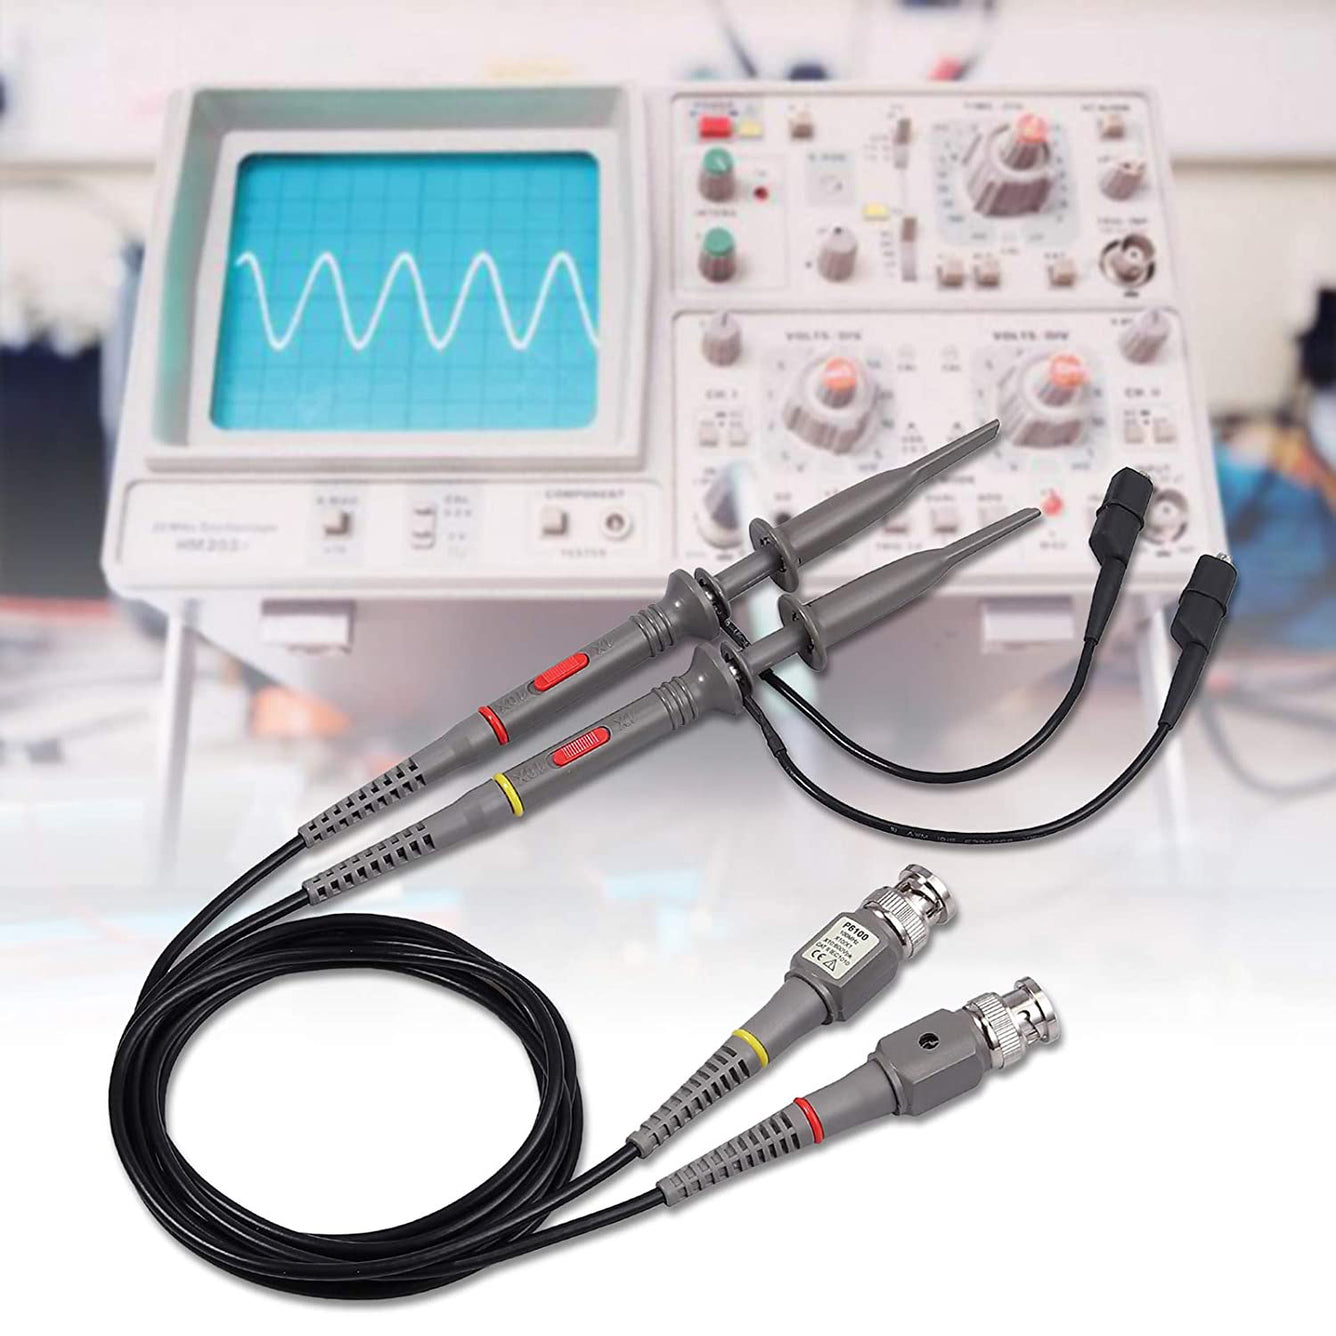 Neoteck P6100 Oscilloscope Probe Kit 100MHz Oscilloscope Clip Probes with BNC to Minigrabber Test Lead Kit